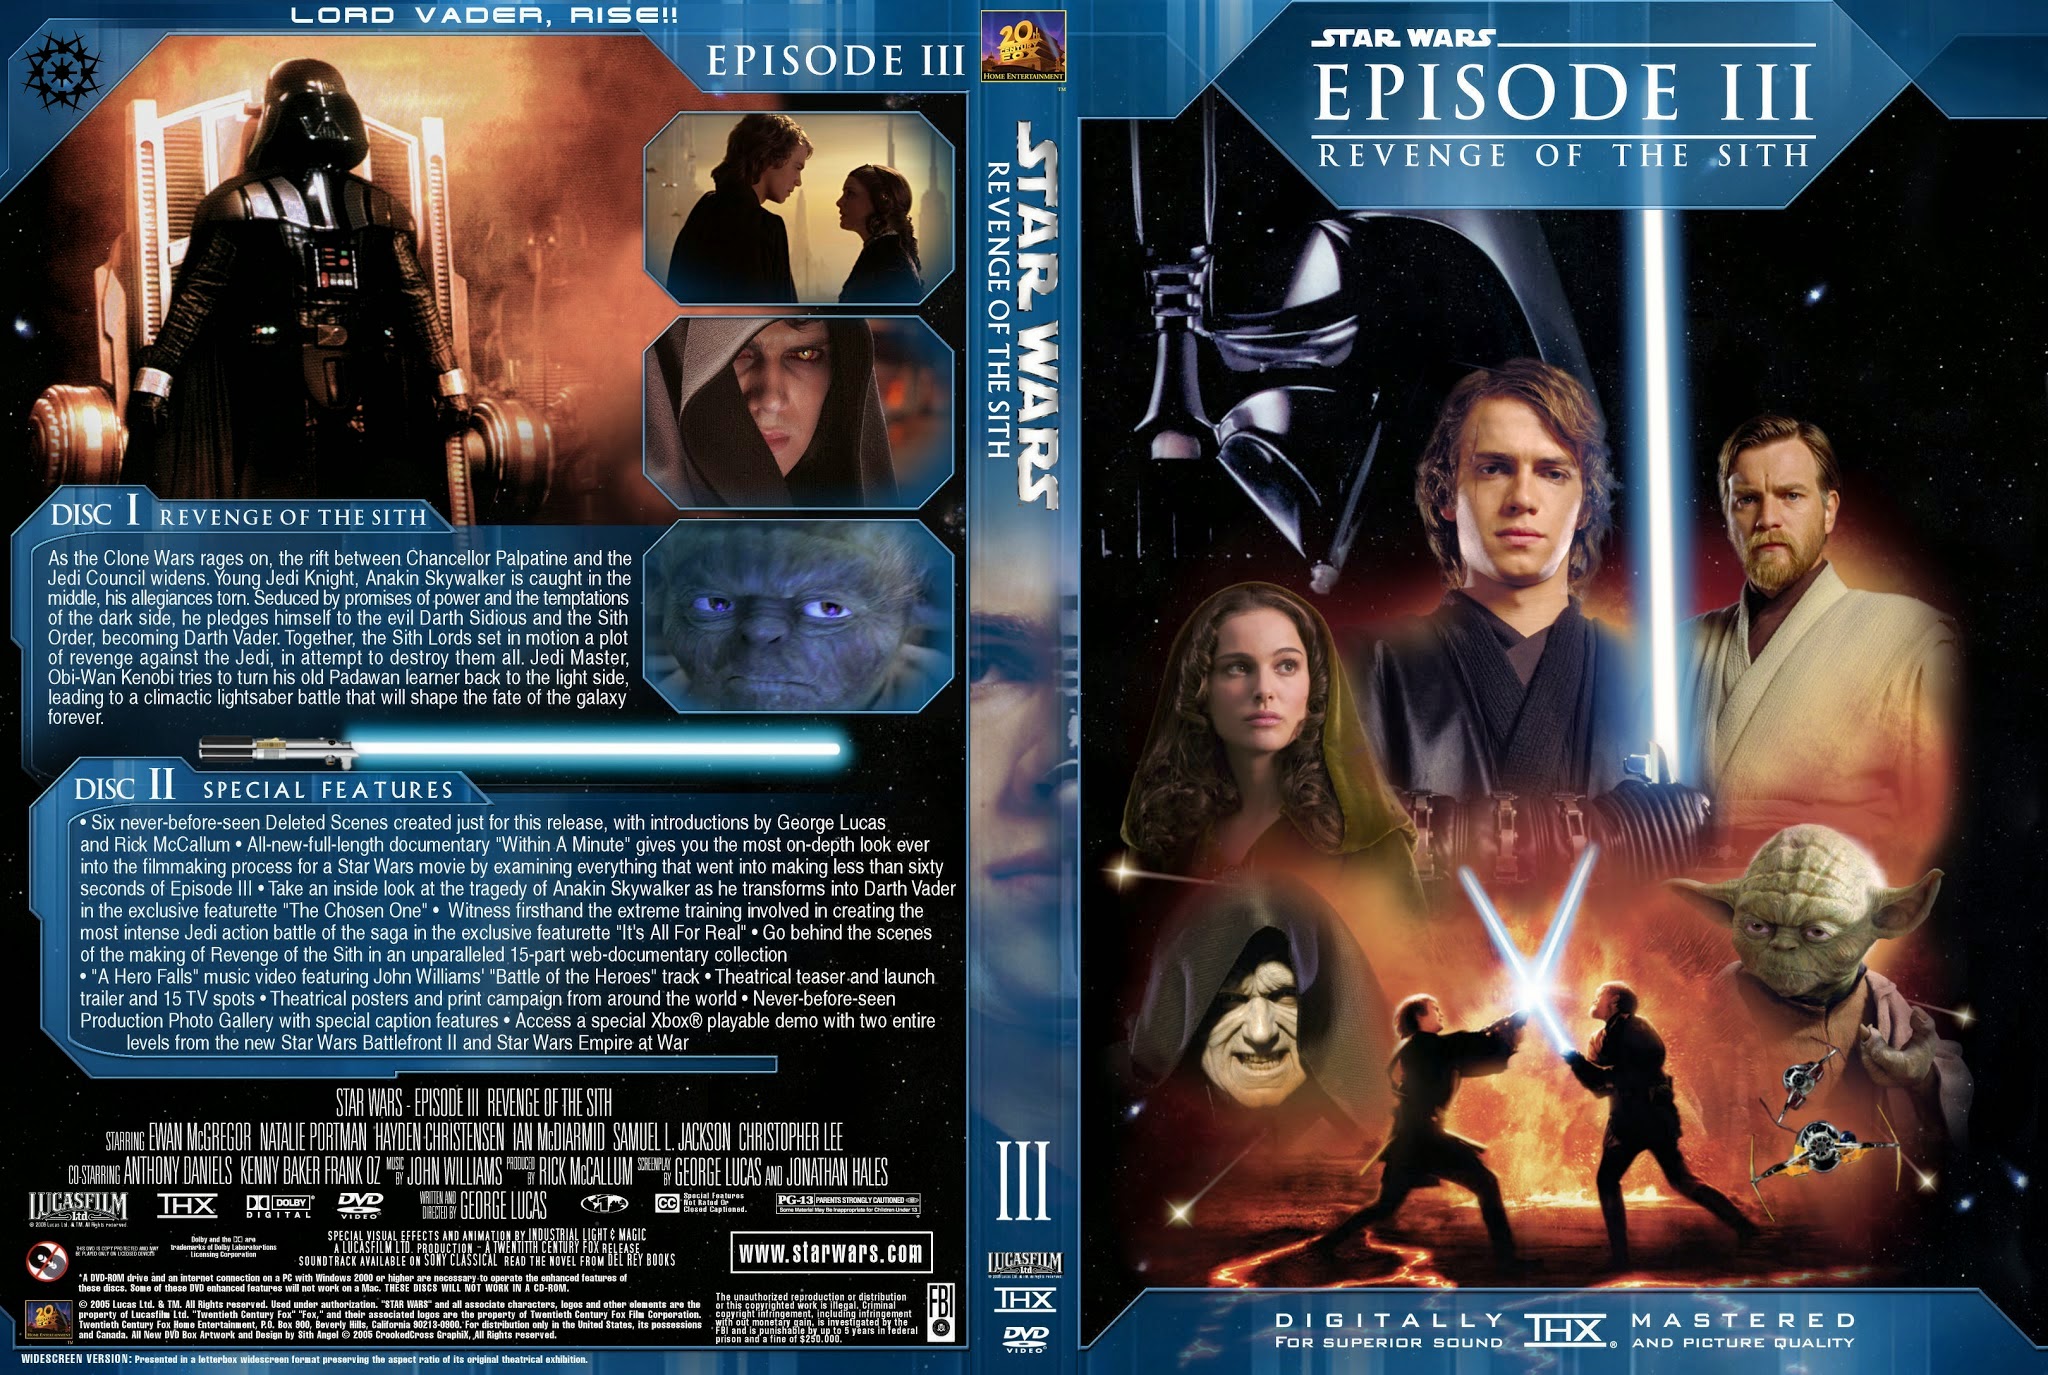 Star Wars Episode III: Revenge of the Sith - DVD.